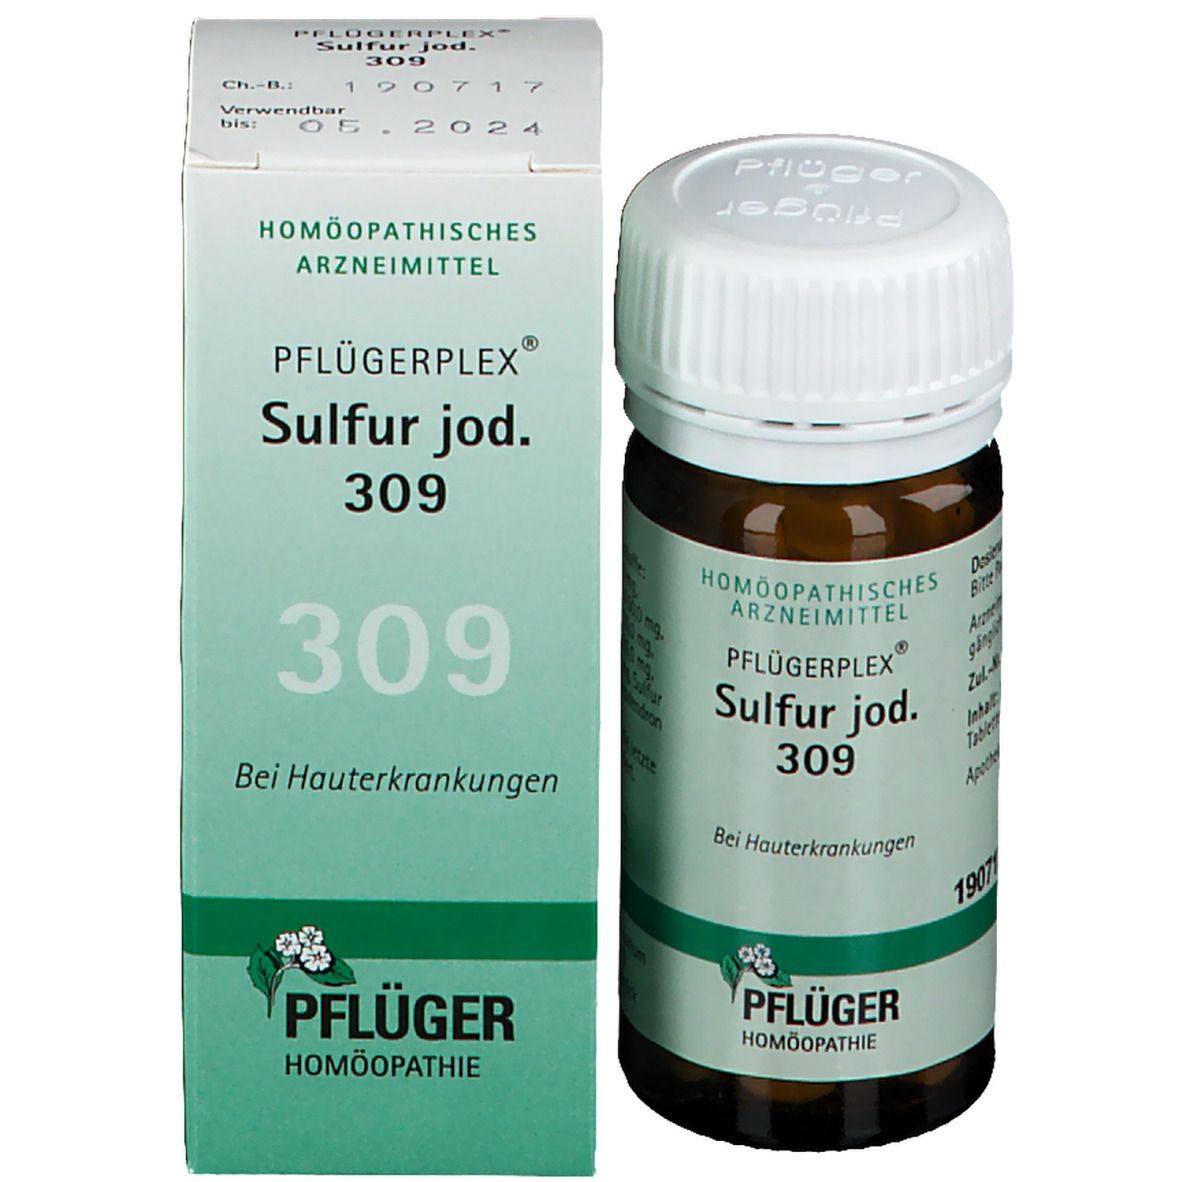 Pflügerplex® Sulfur jod 309